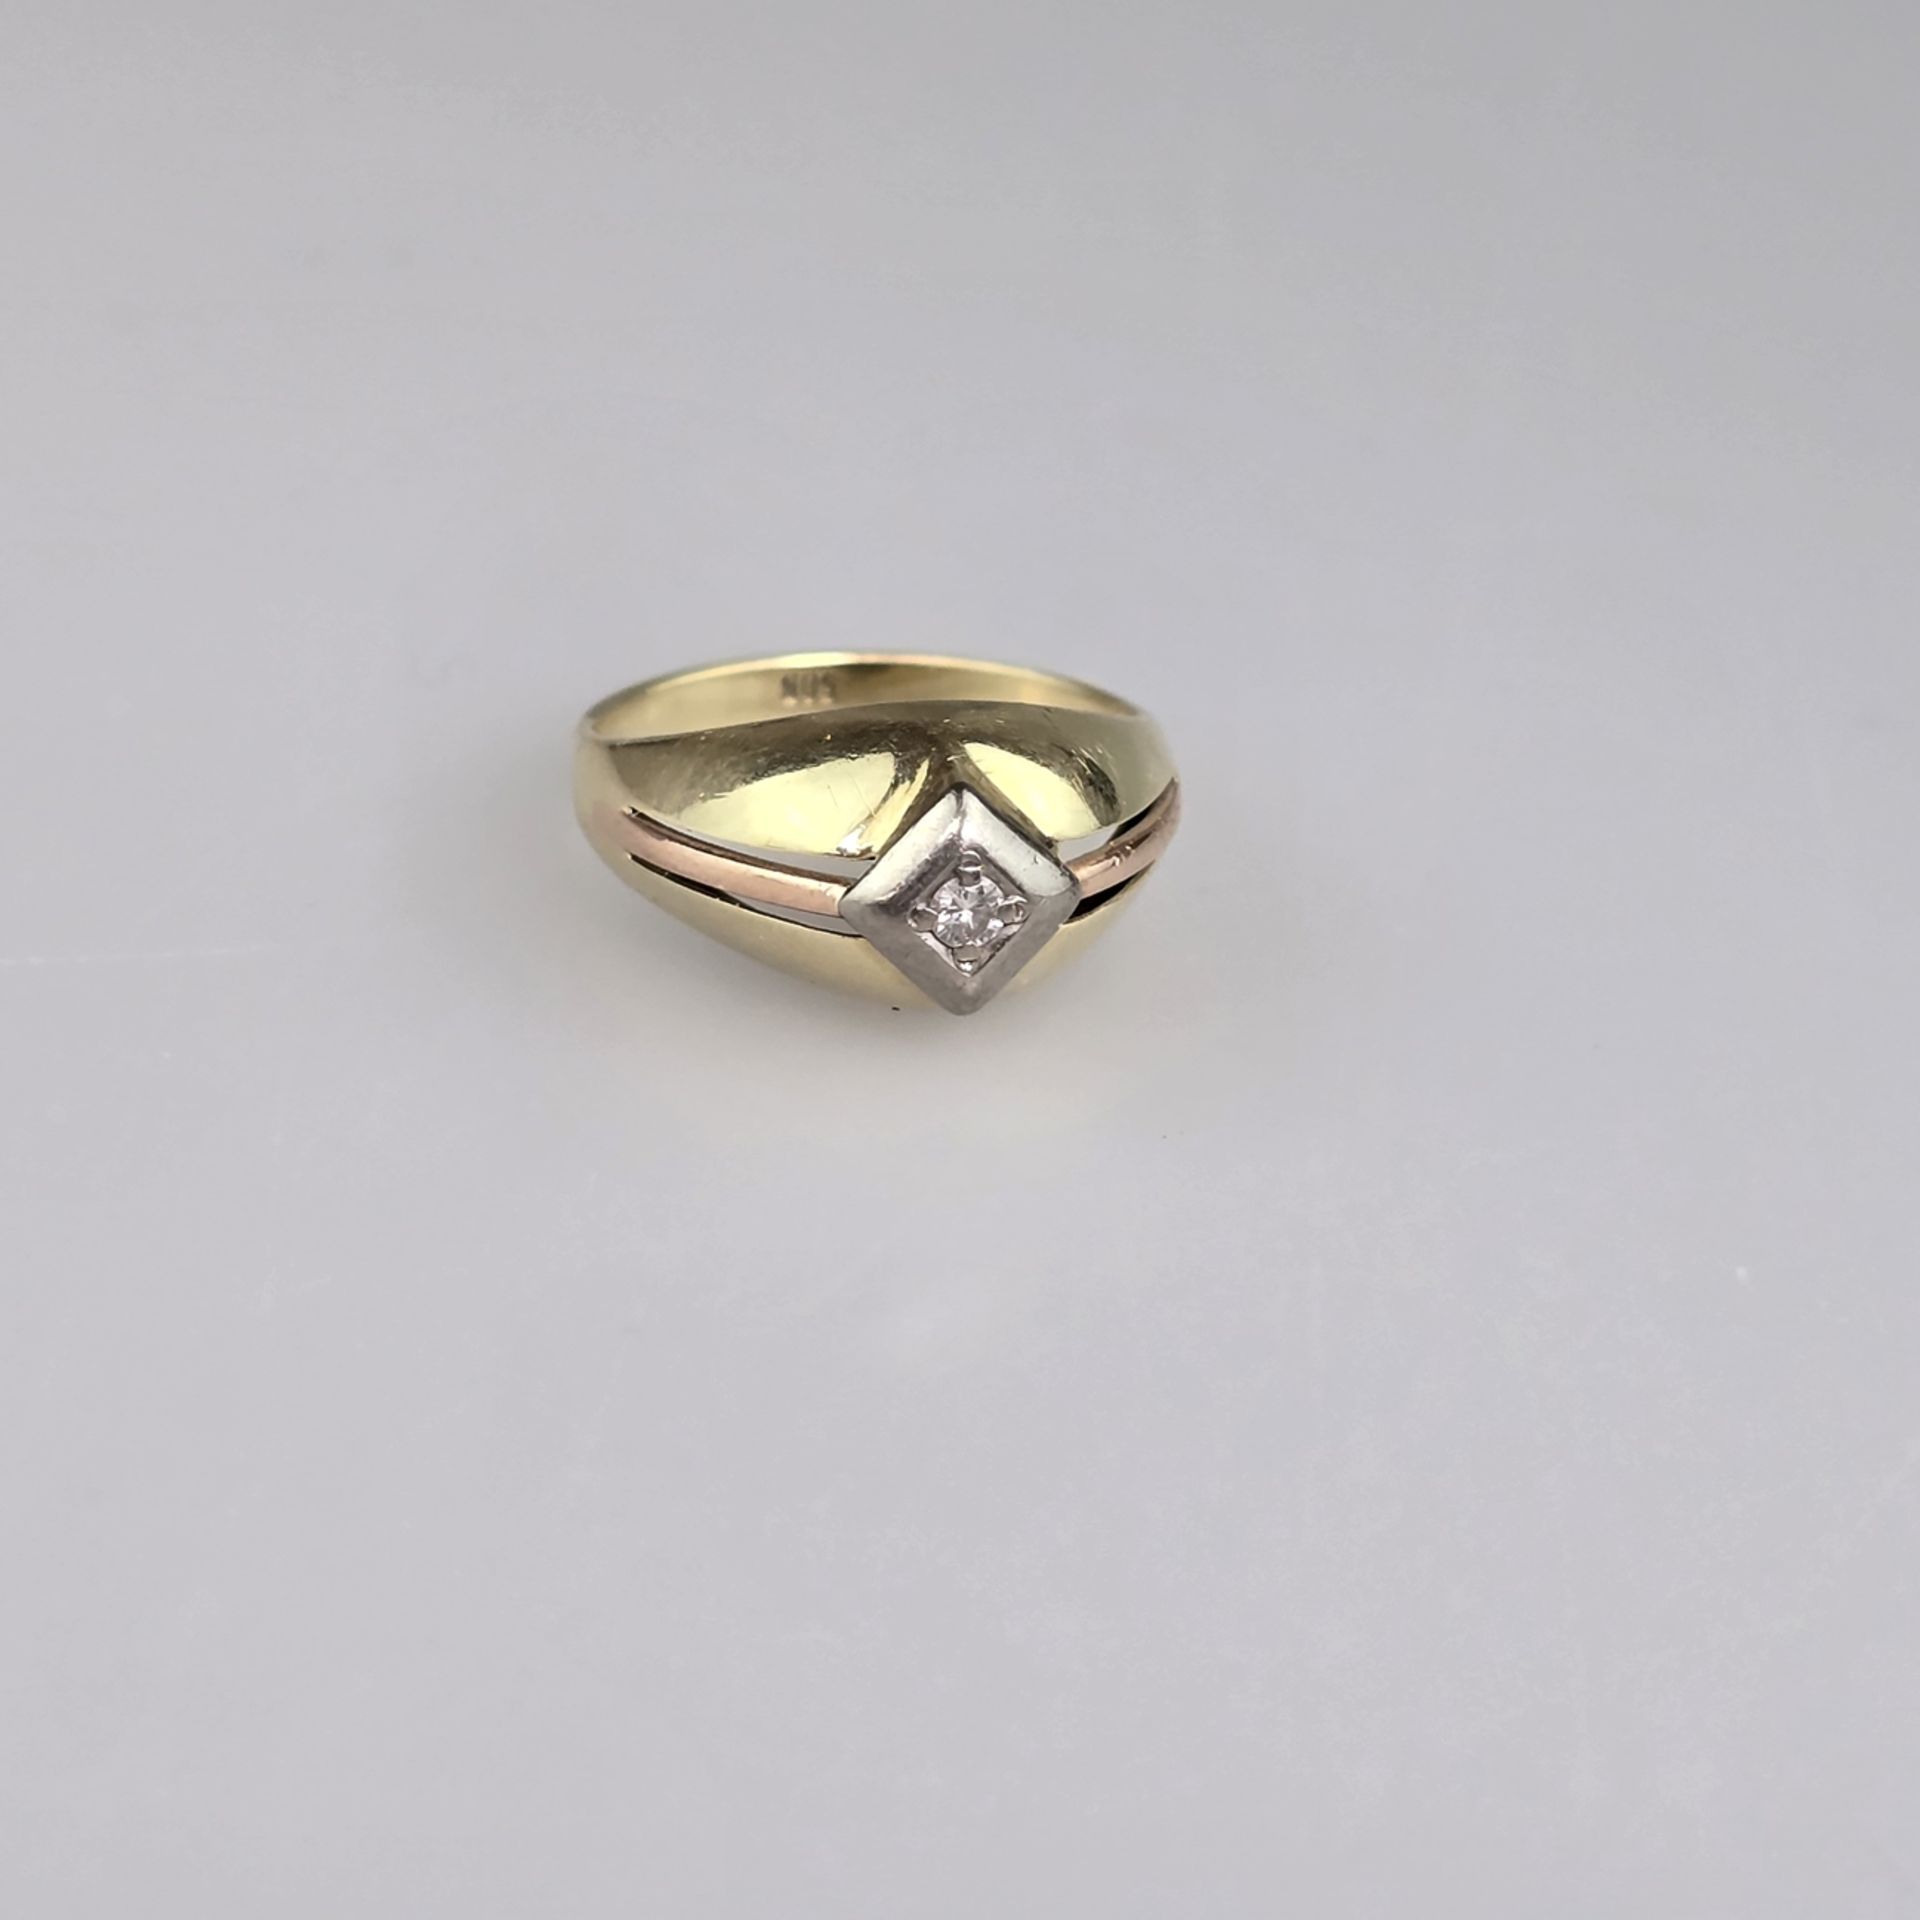 Diamantring - Rot-/Gelbgold 585/000 (14K), gestempelt, spitzbogig gekuppelter Ringkopf besetzt mit - Image 4 of 6